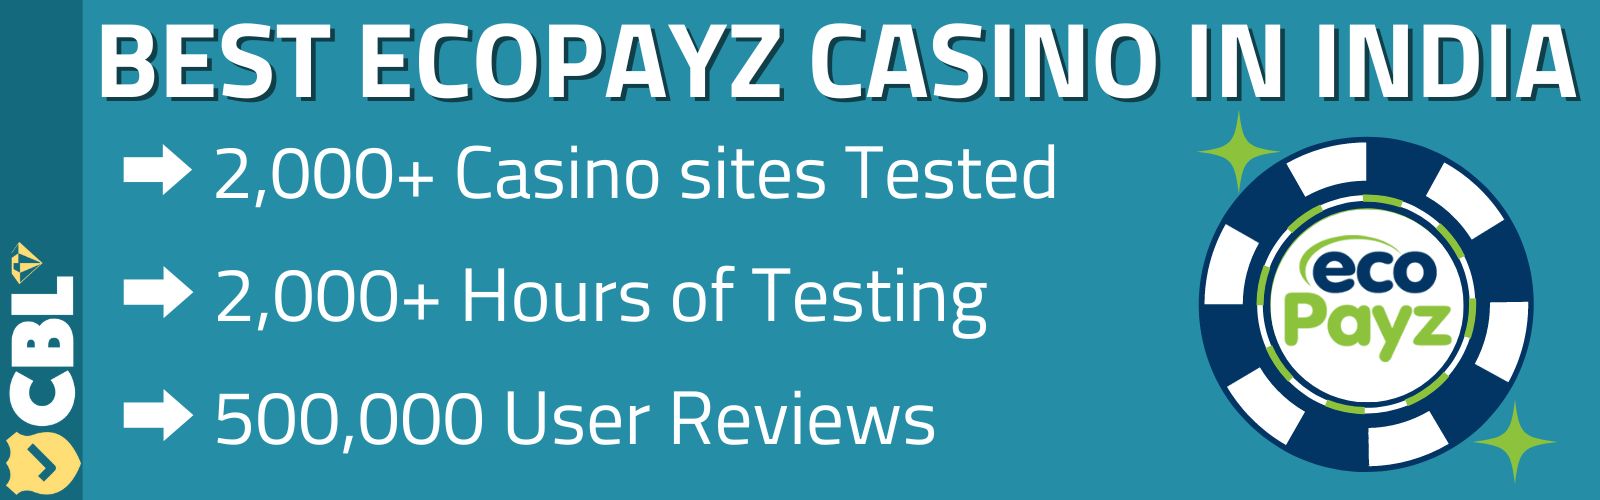 Ecopayz Casino India